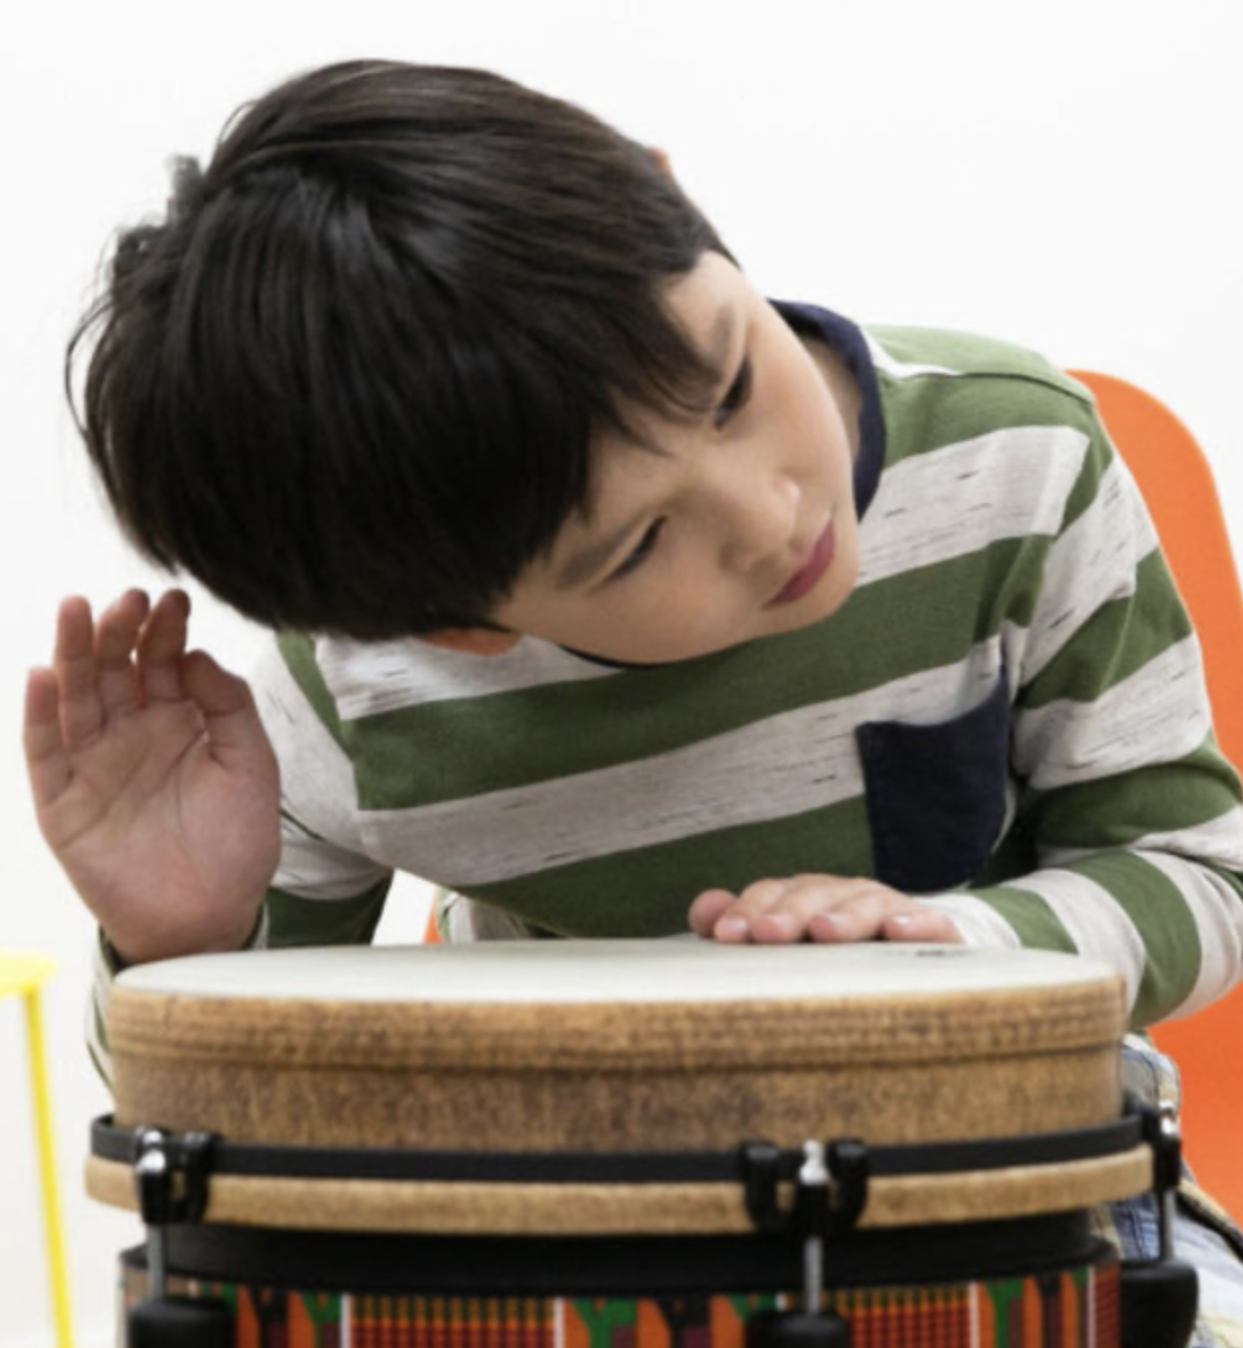 Drumming: K-8th